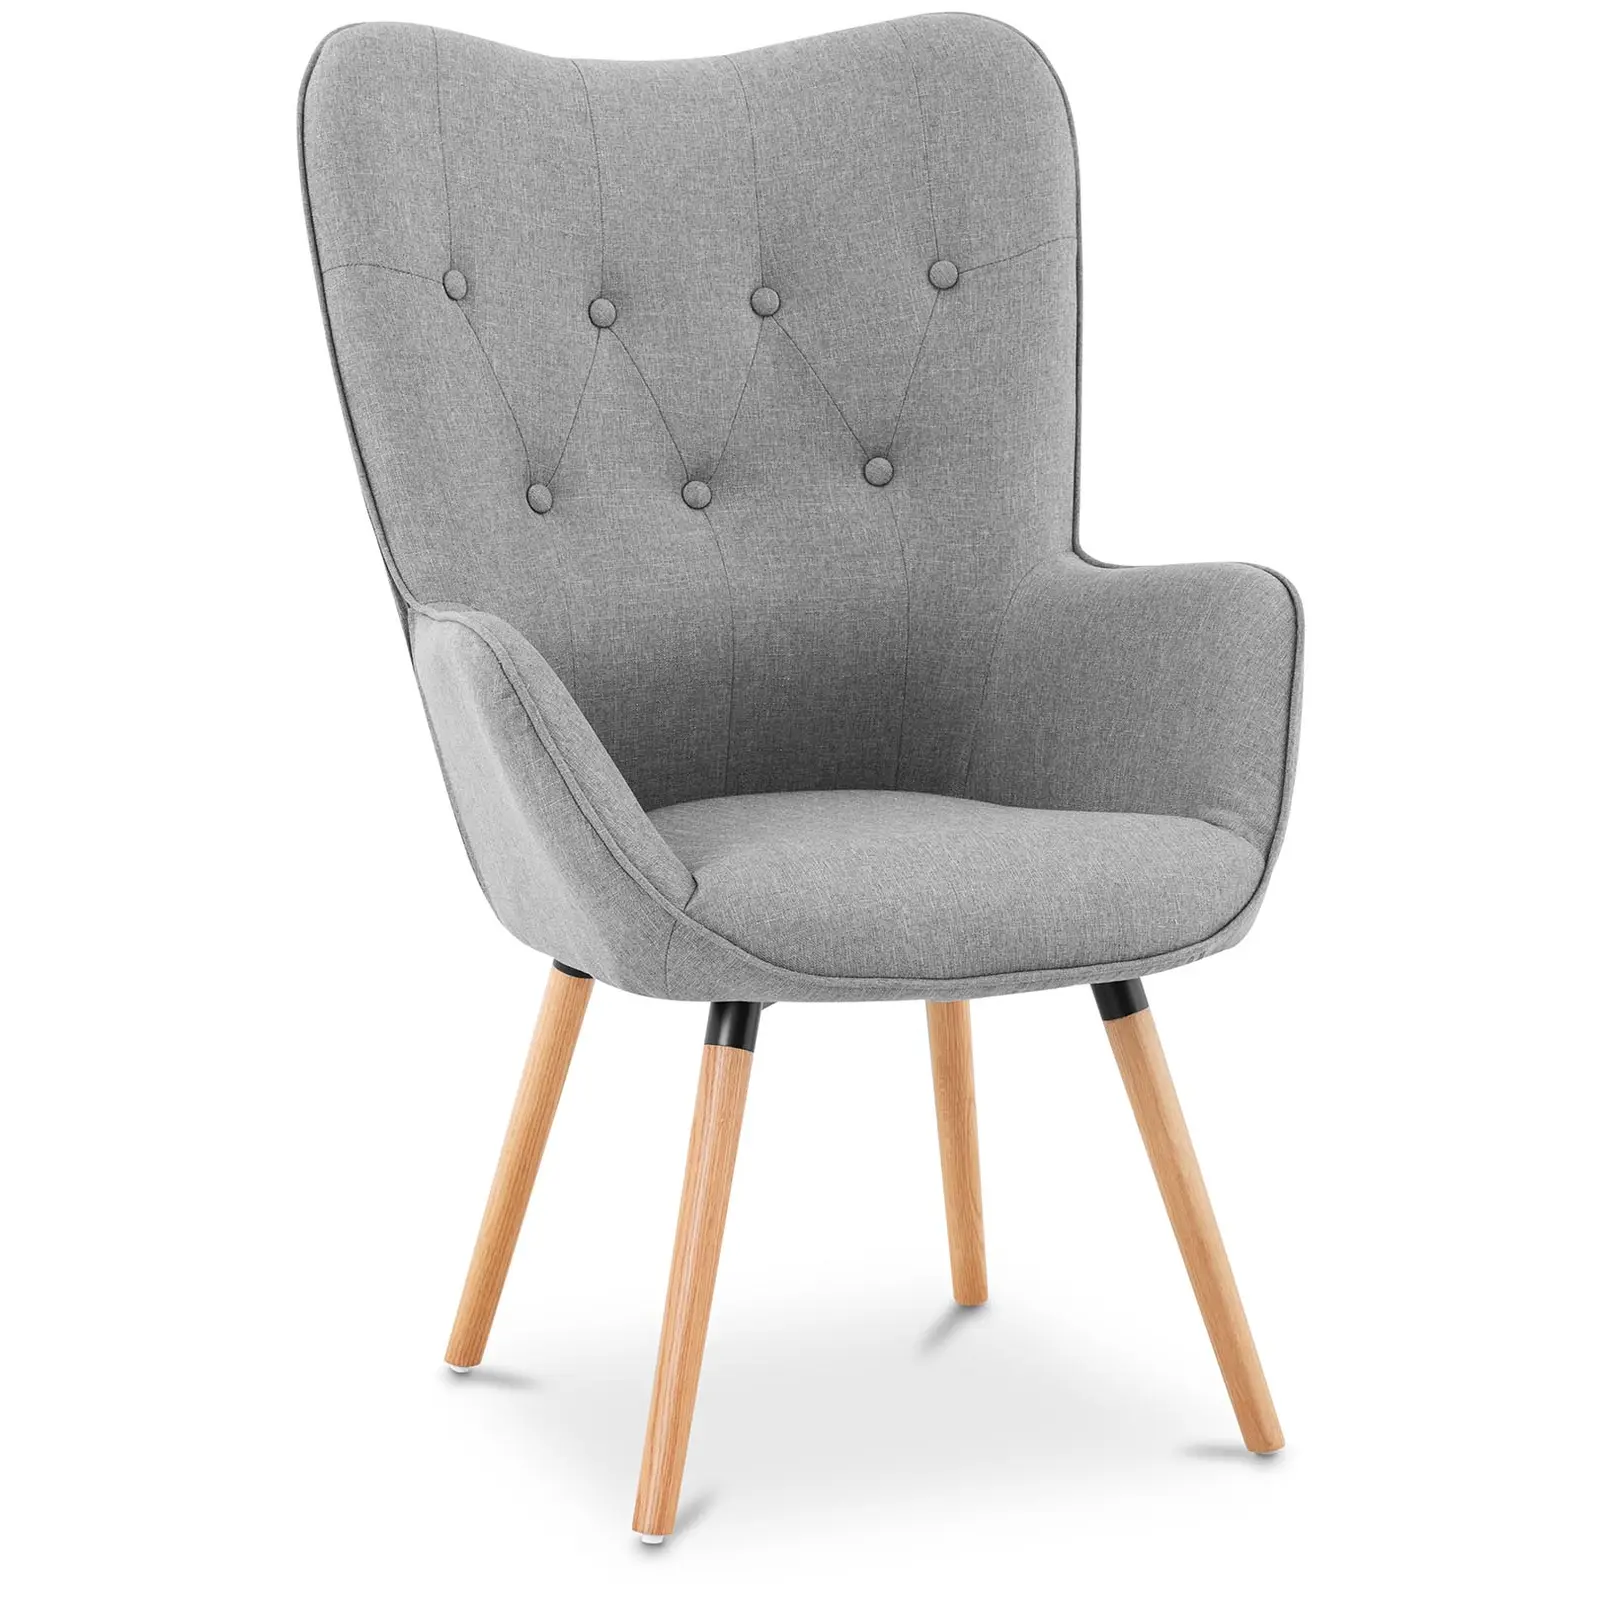 Minkšta kėdė - iki 160 kg - sėdynės matmenys: 43 x 49 cm - pilka